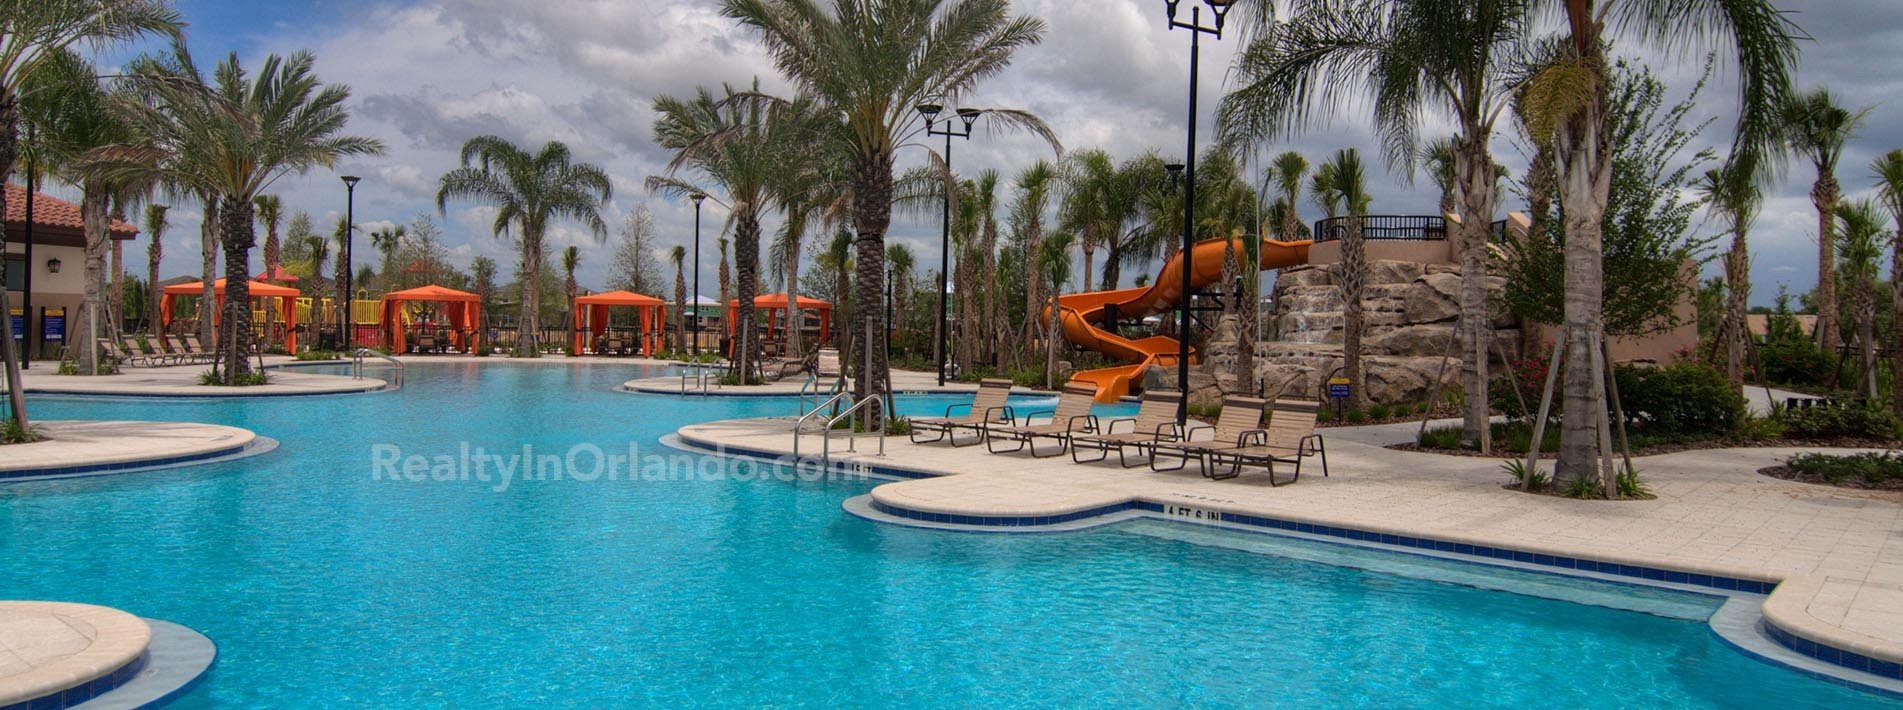 Solterra Resort Community Pool